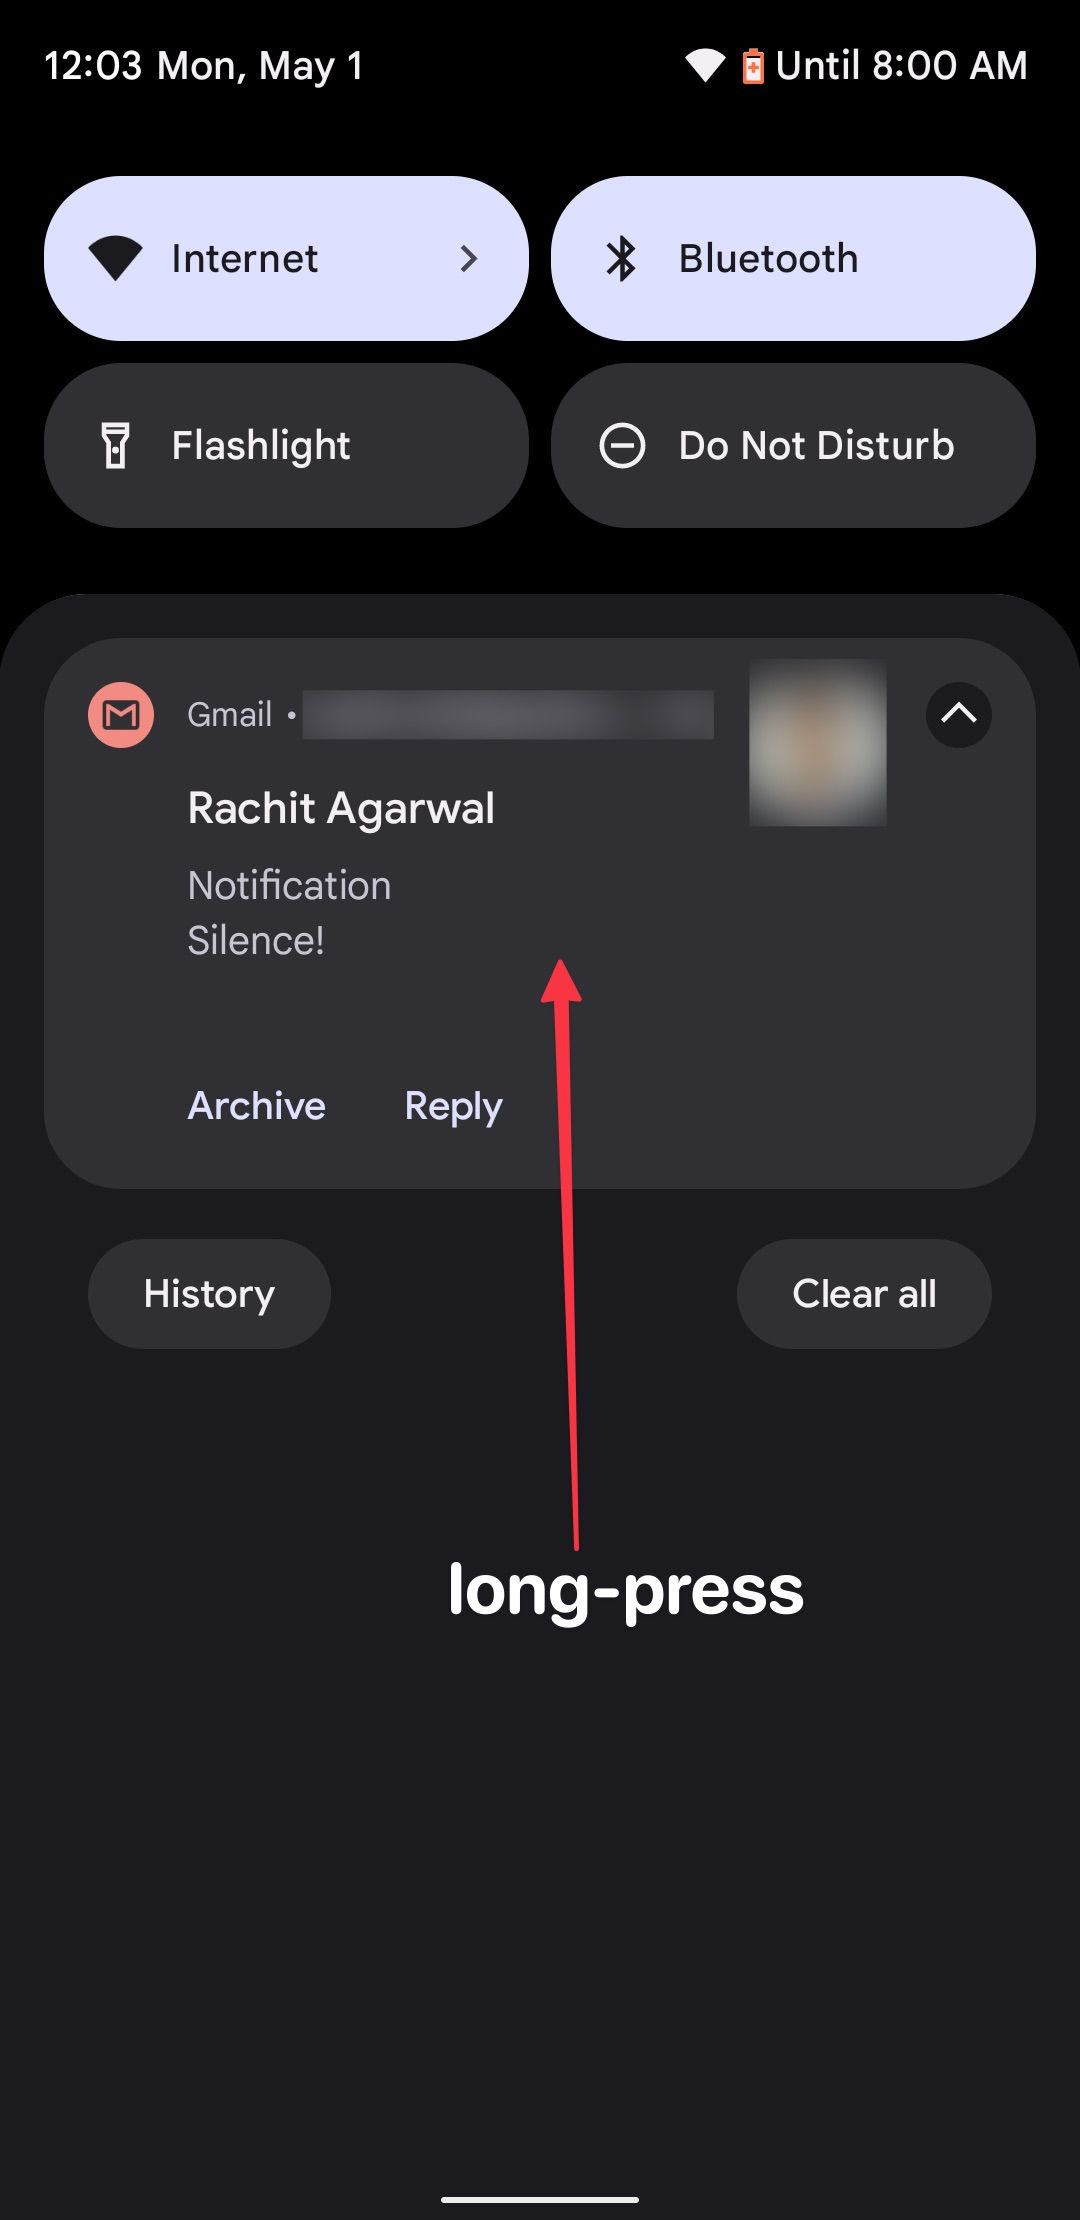 Long-press on notification in notification panel